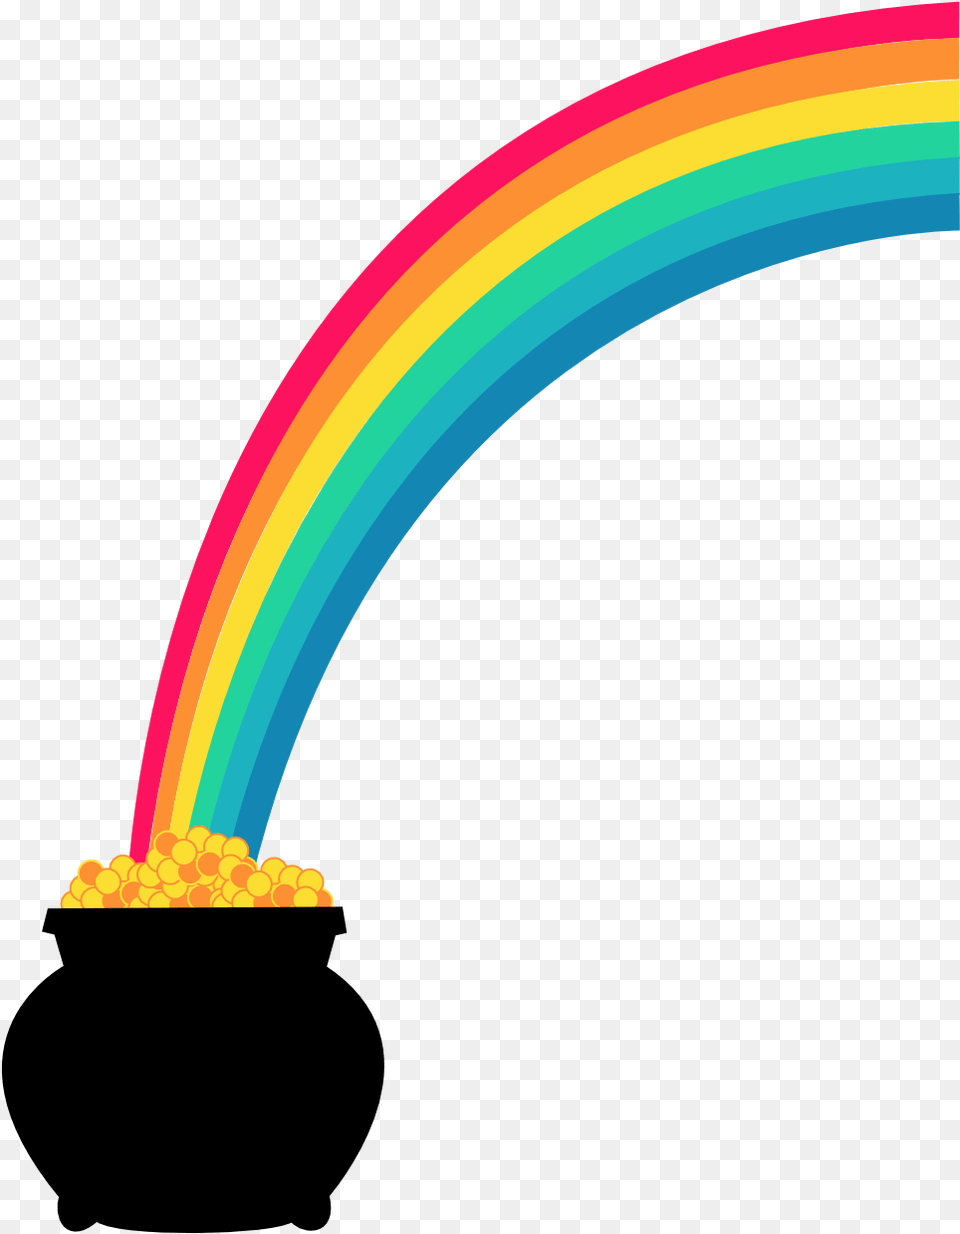 Slankys Rainbow Pot Of Gold, Nature, Outdoors, Sky, Light Free Png